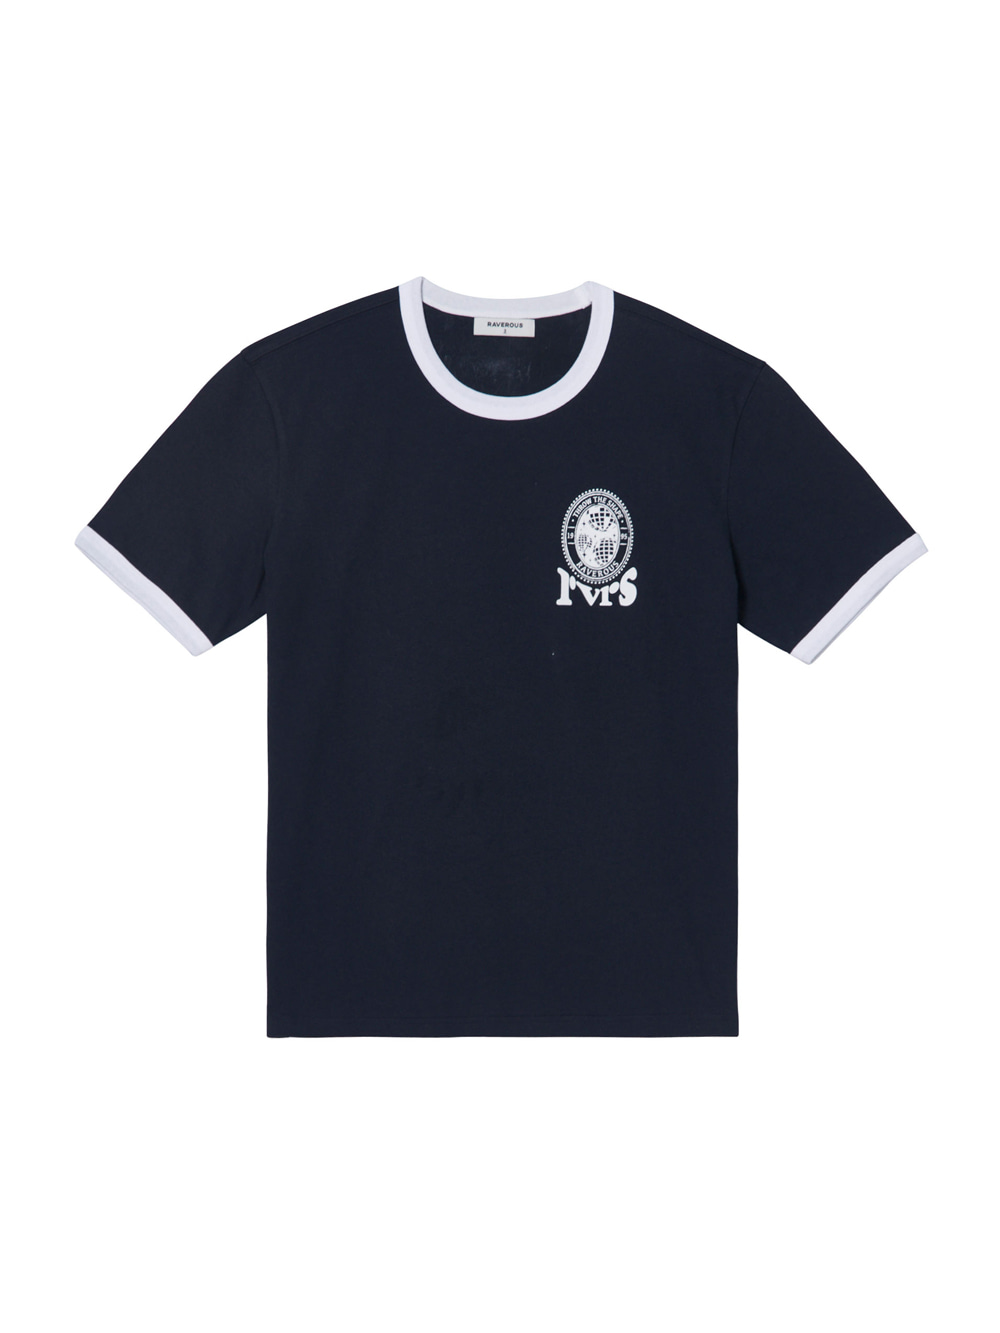 Ringer T-Shirts Navy